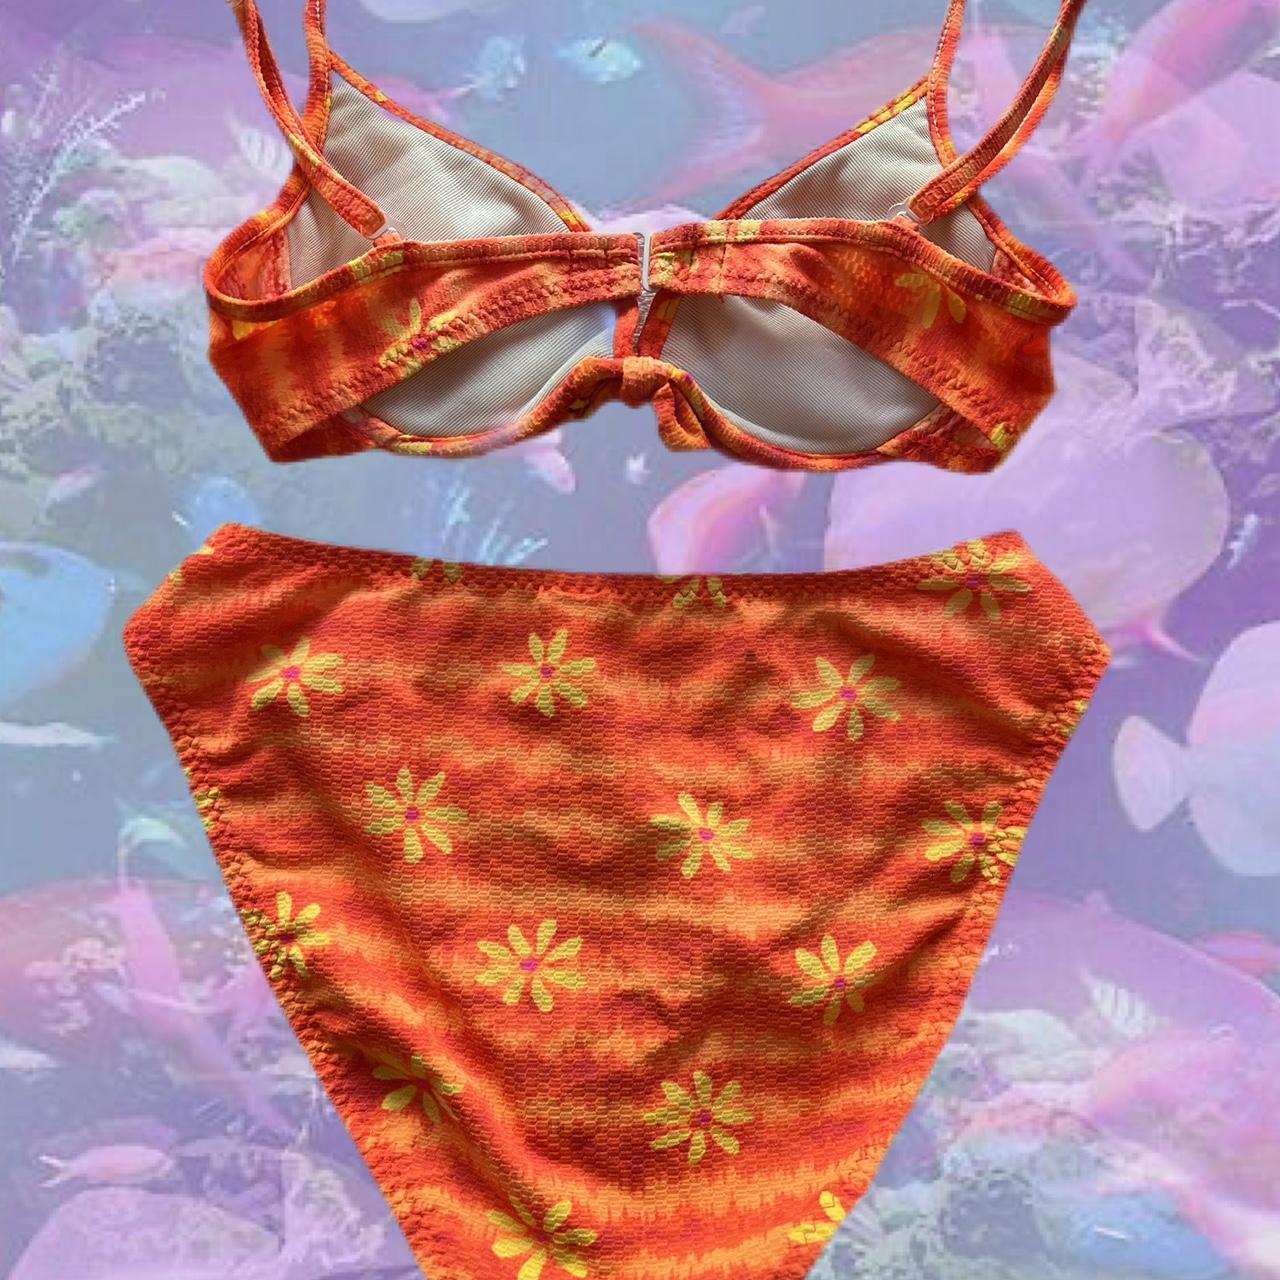 California Waves Women's Orange and Yellow Bikinis-and-tankini-sets (4)